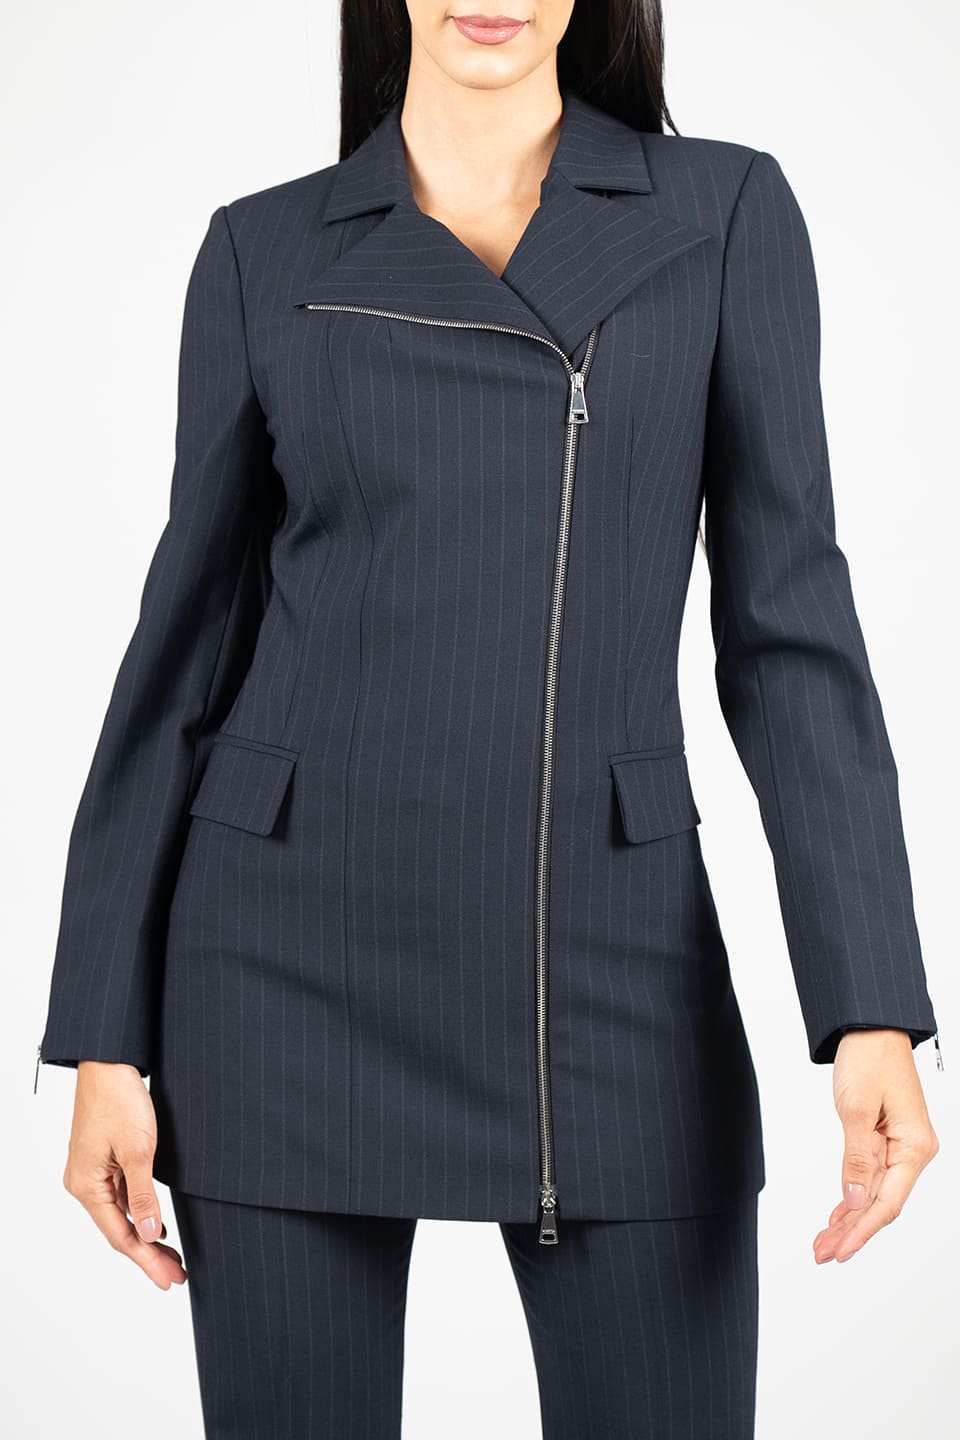 Shop online trendy Blue Women blazers from Vivetta Fashion designer. Product gallery 1